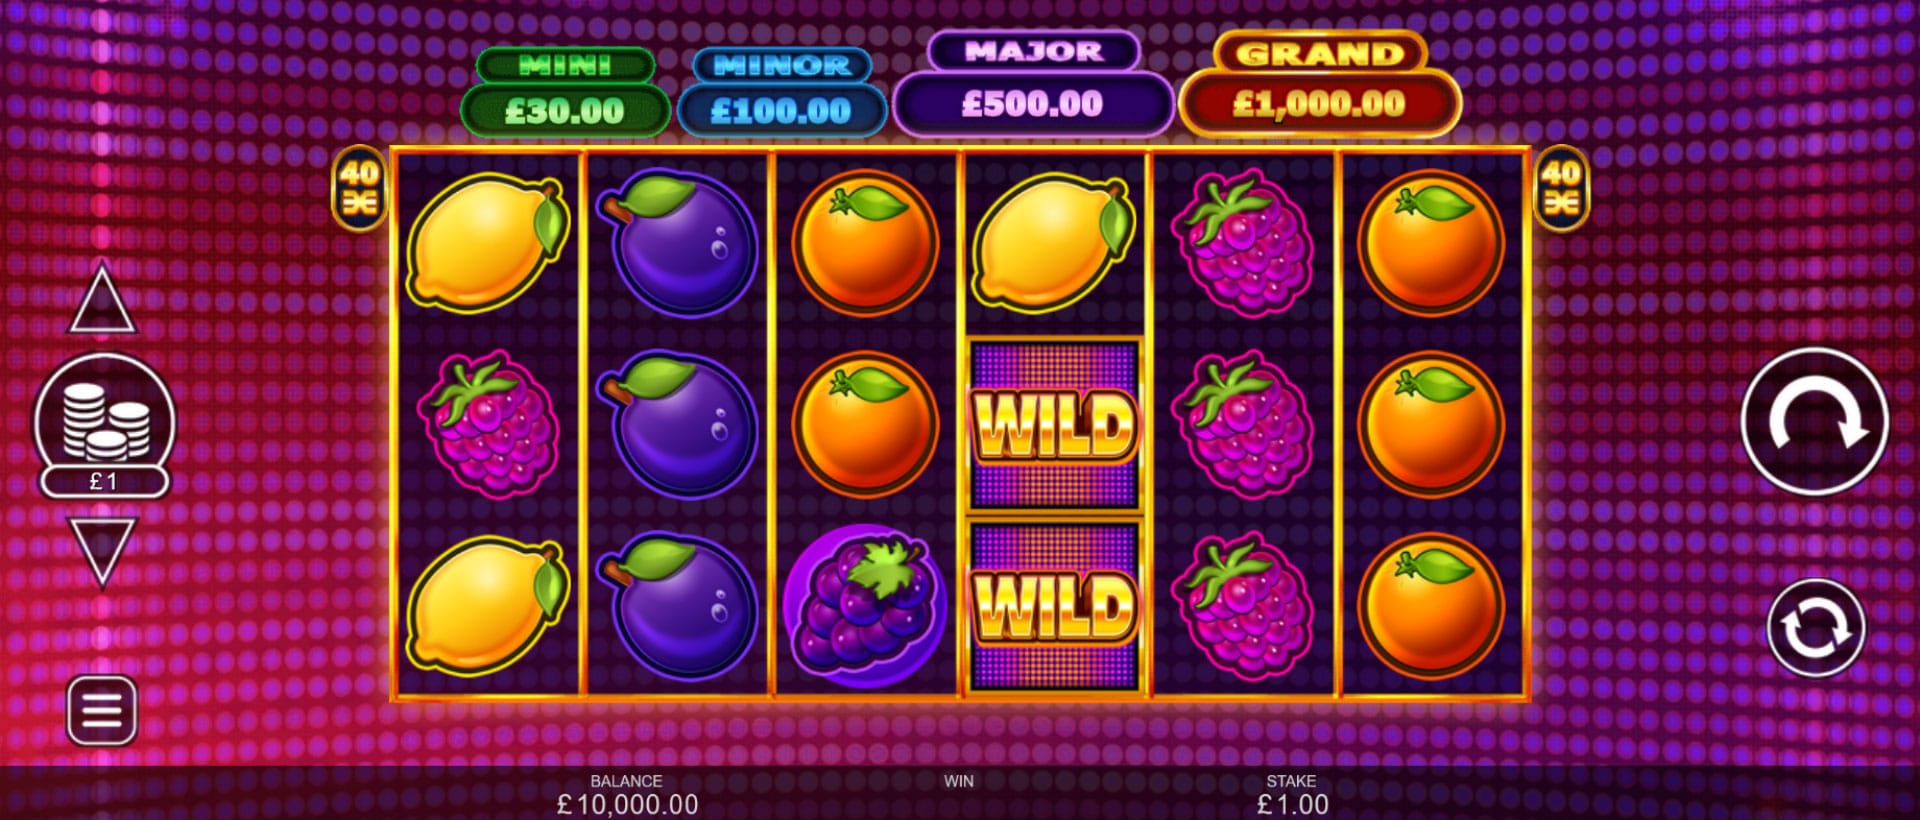 griglia del gioco slot machine bonus fruits